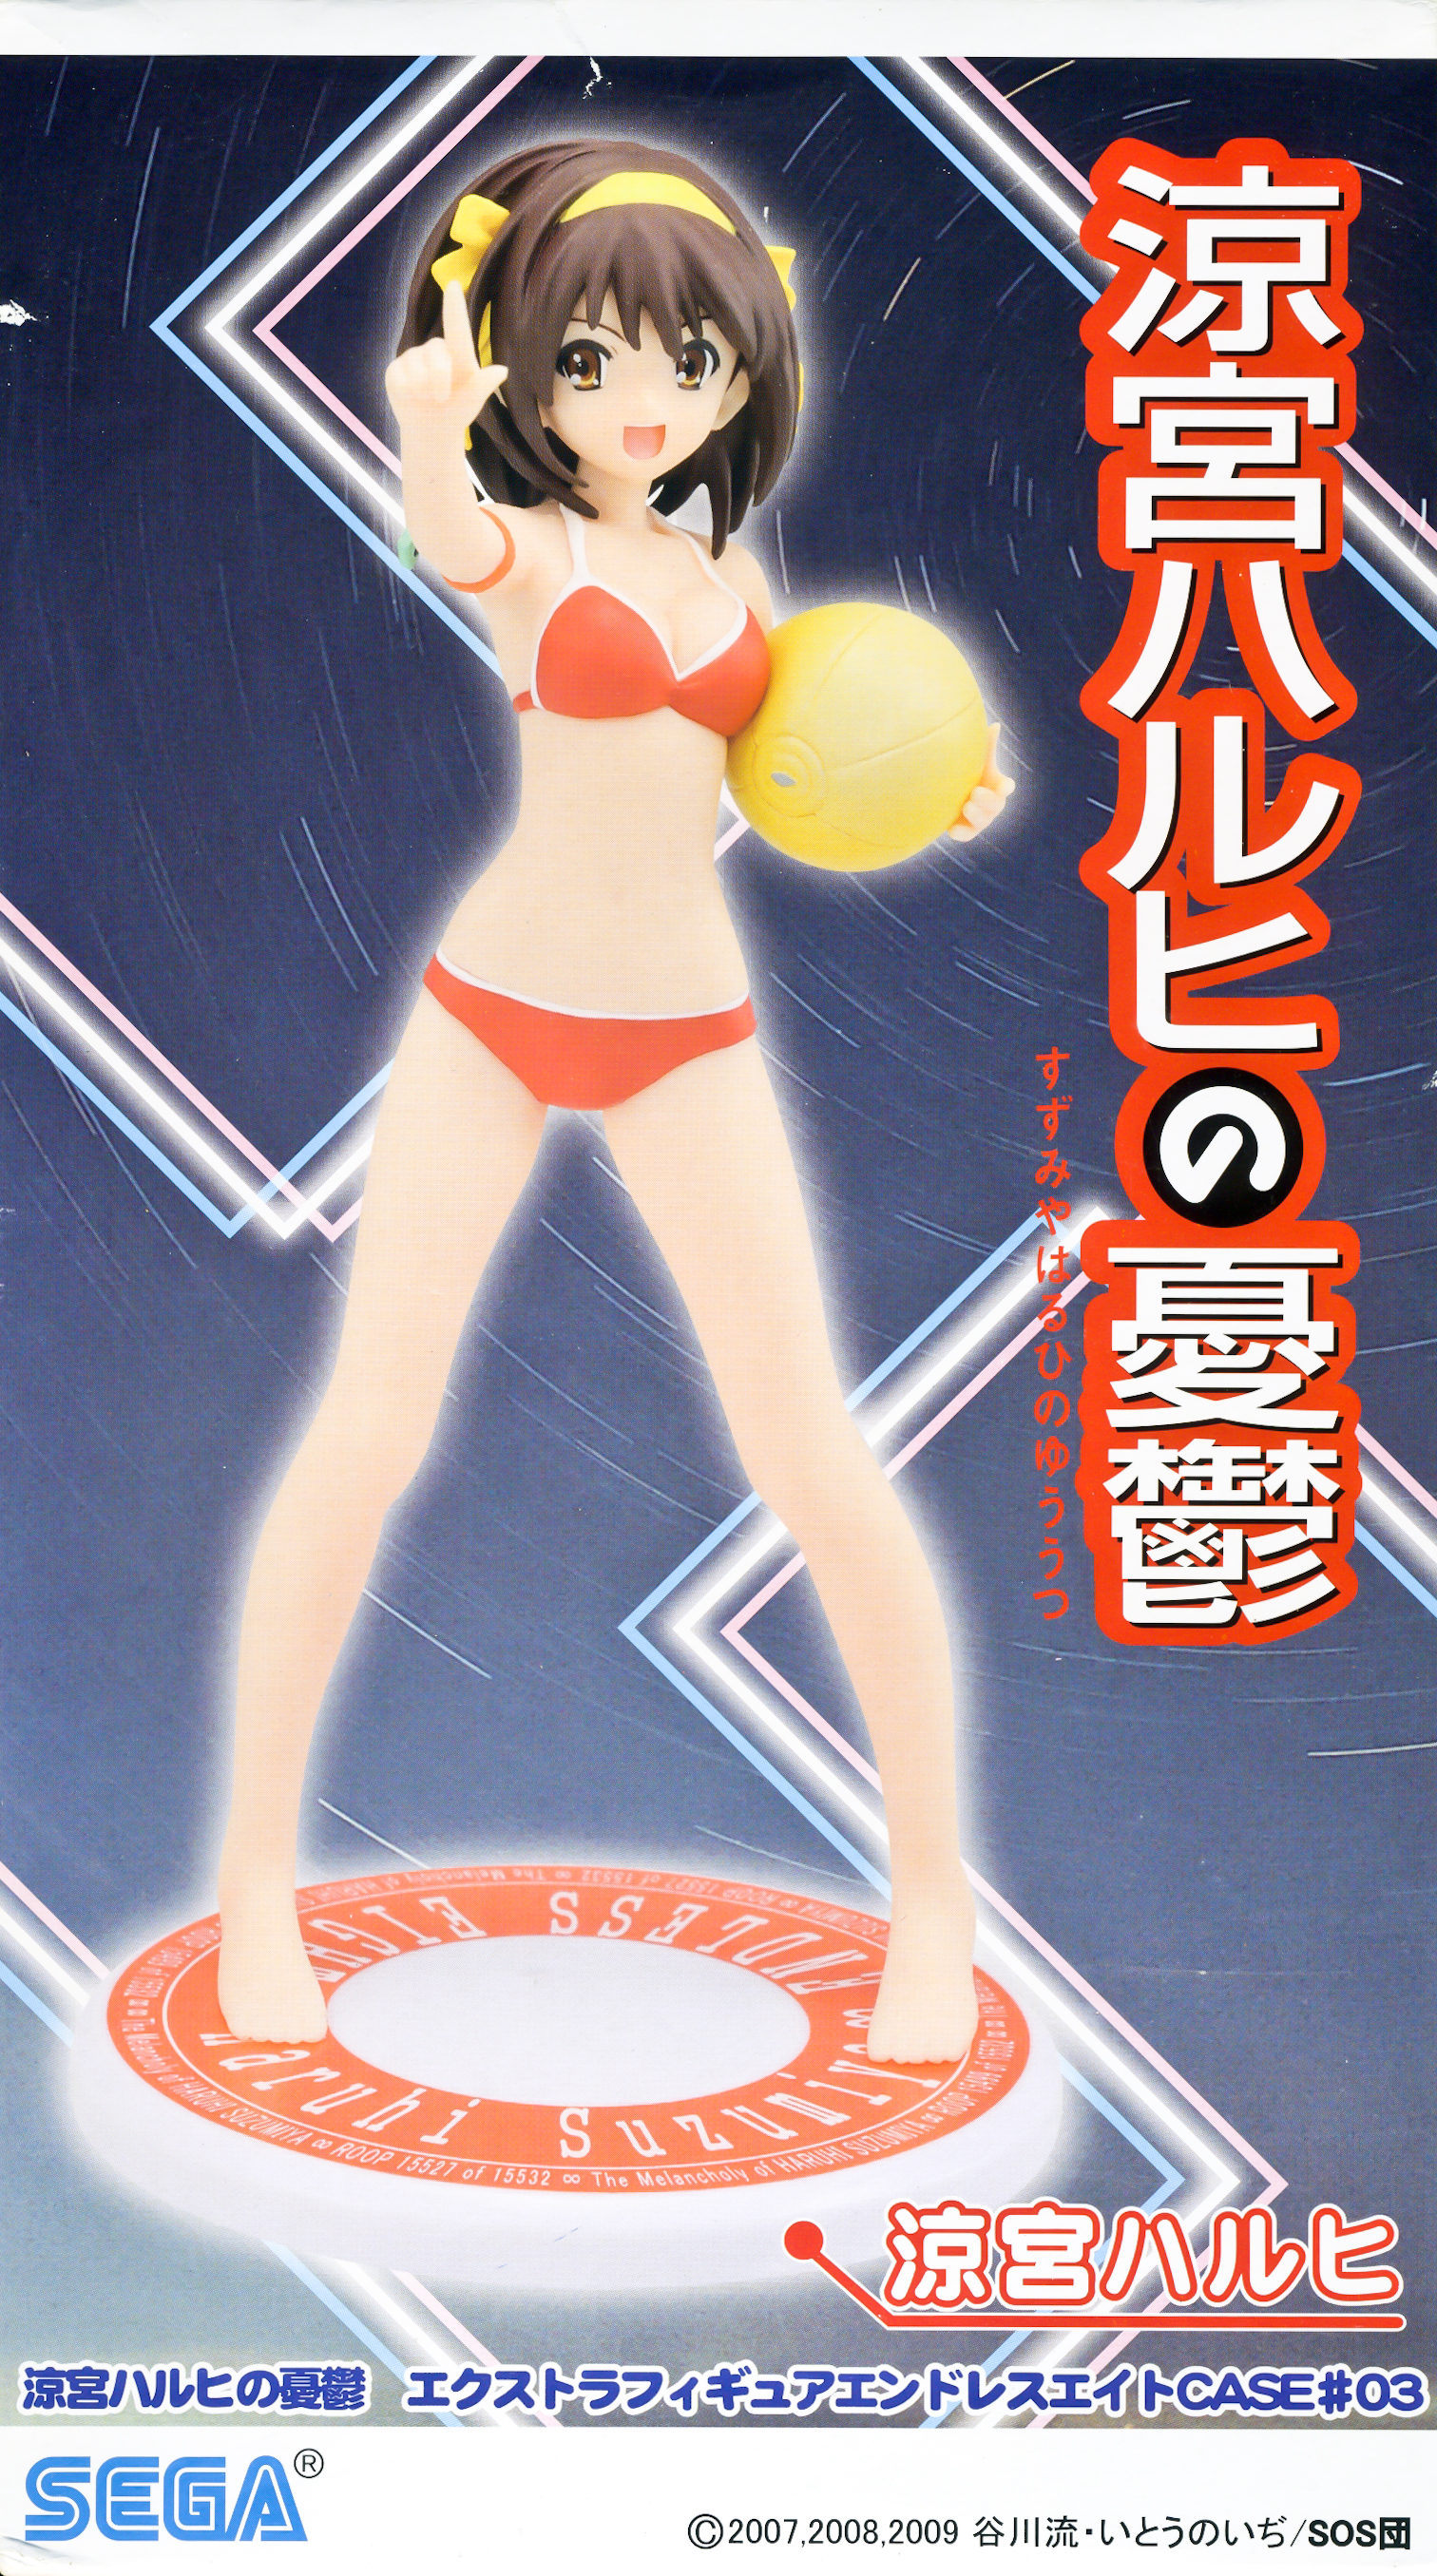 Haruhi Suzumiya, Extra Figure, Case #01, The Melancholy of Haruhi Suzumiya, Sega